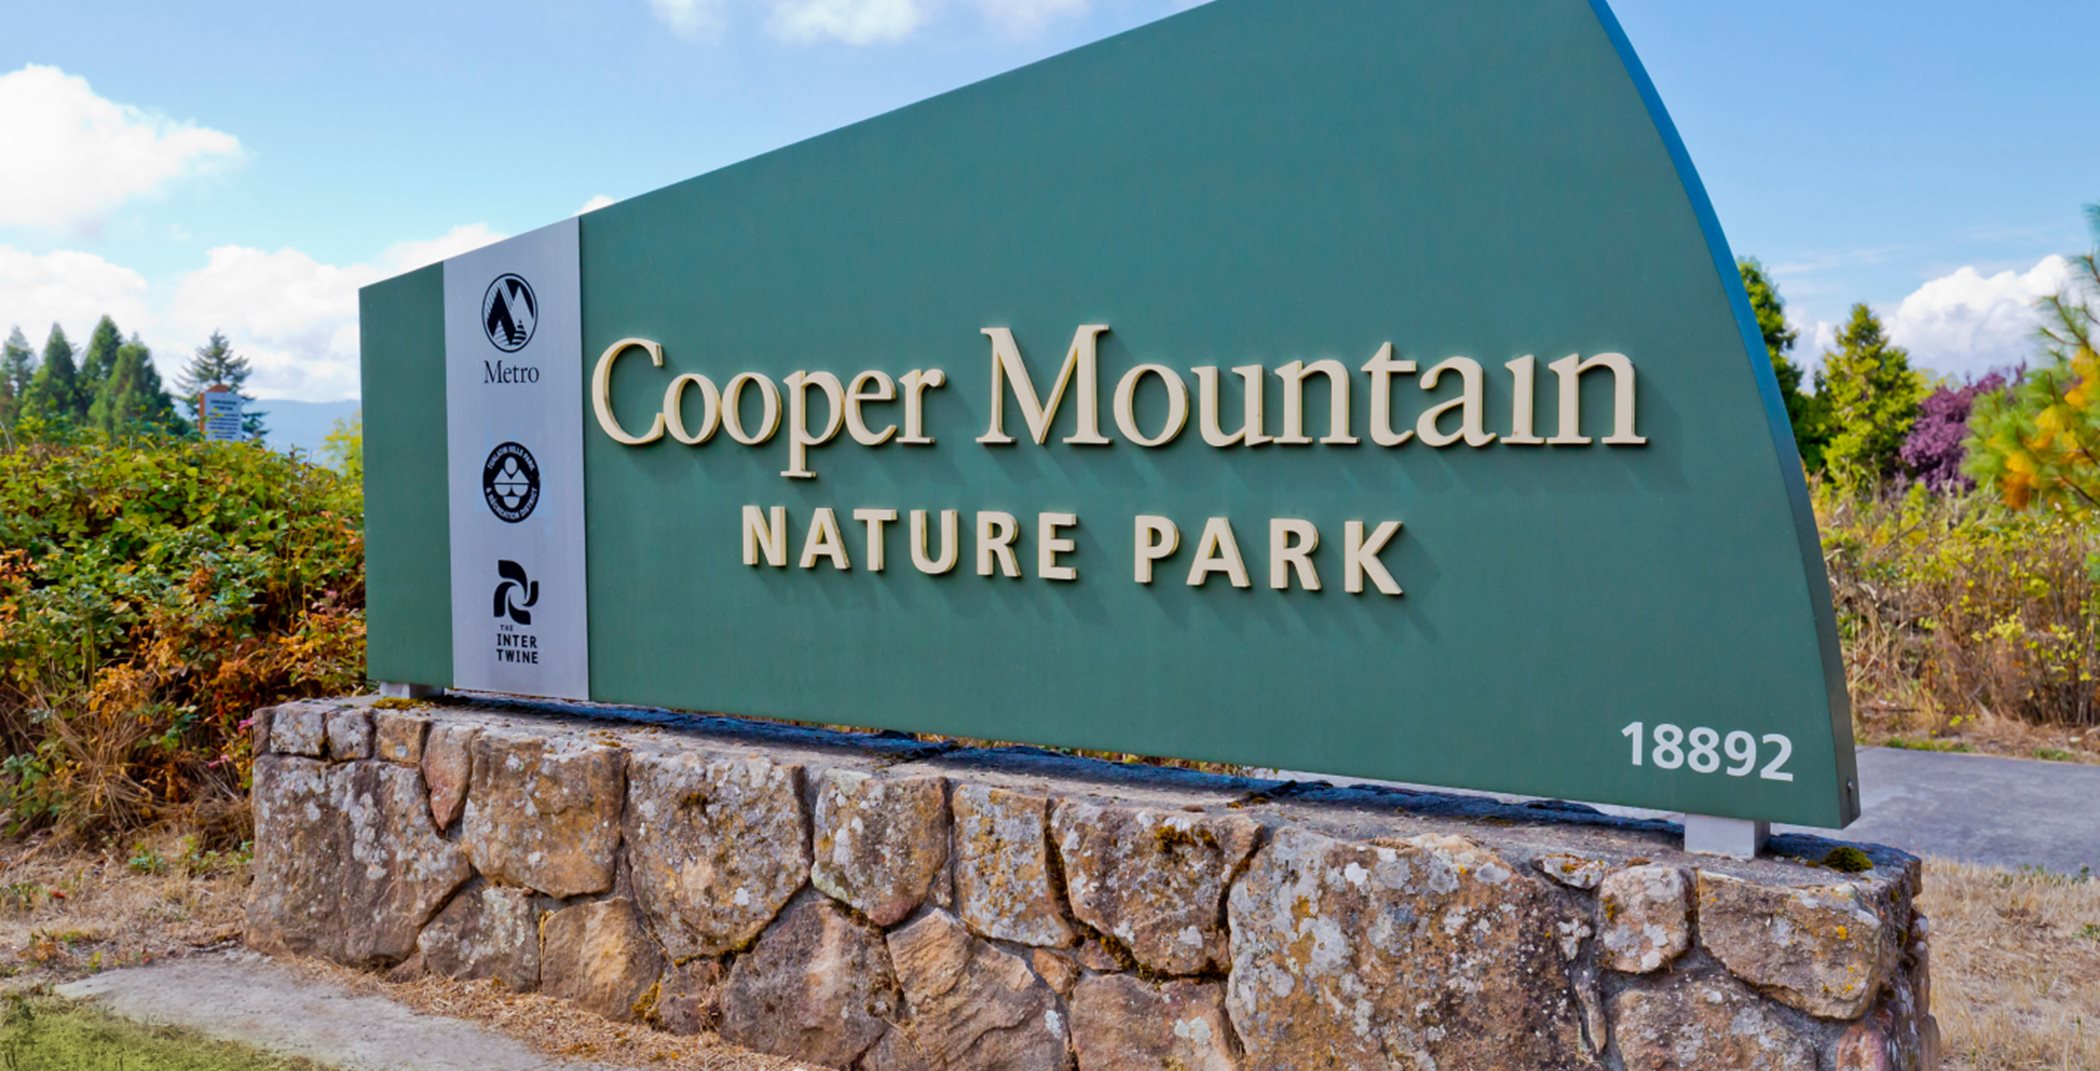 Cooper Mountain nature park